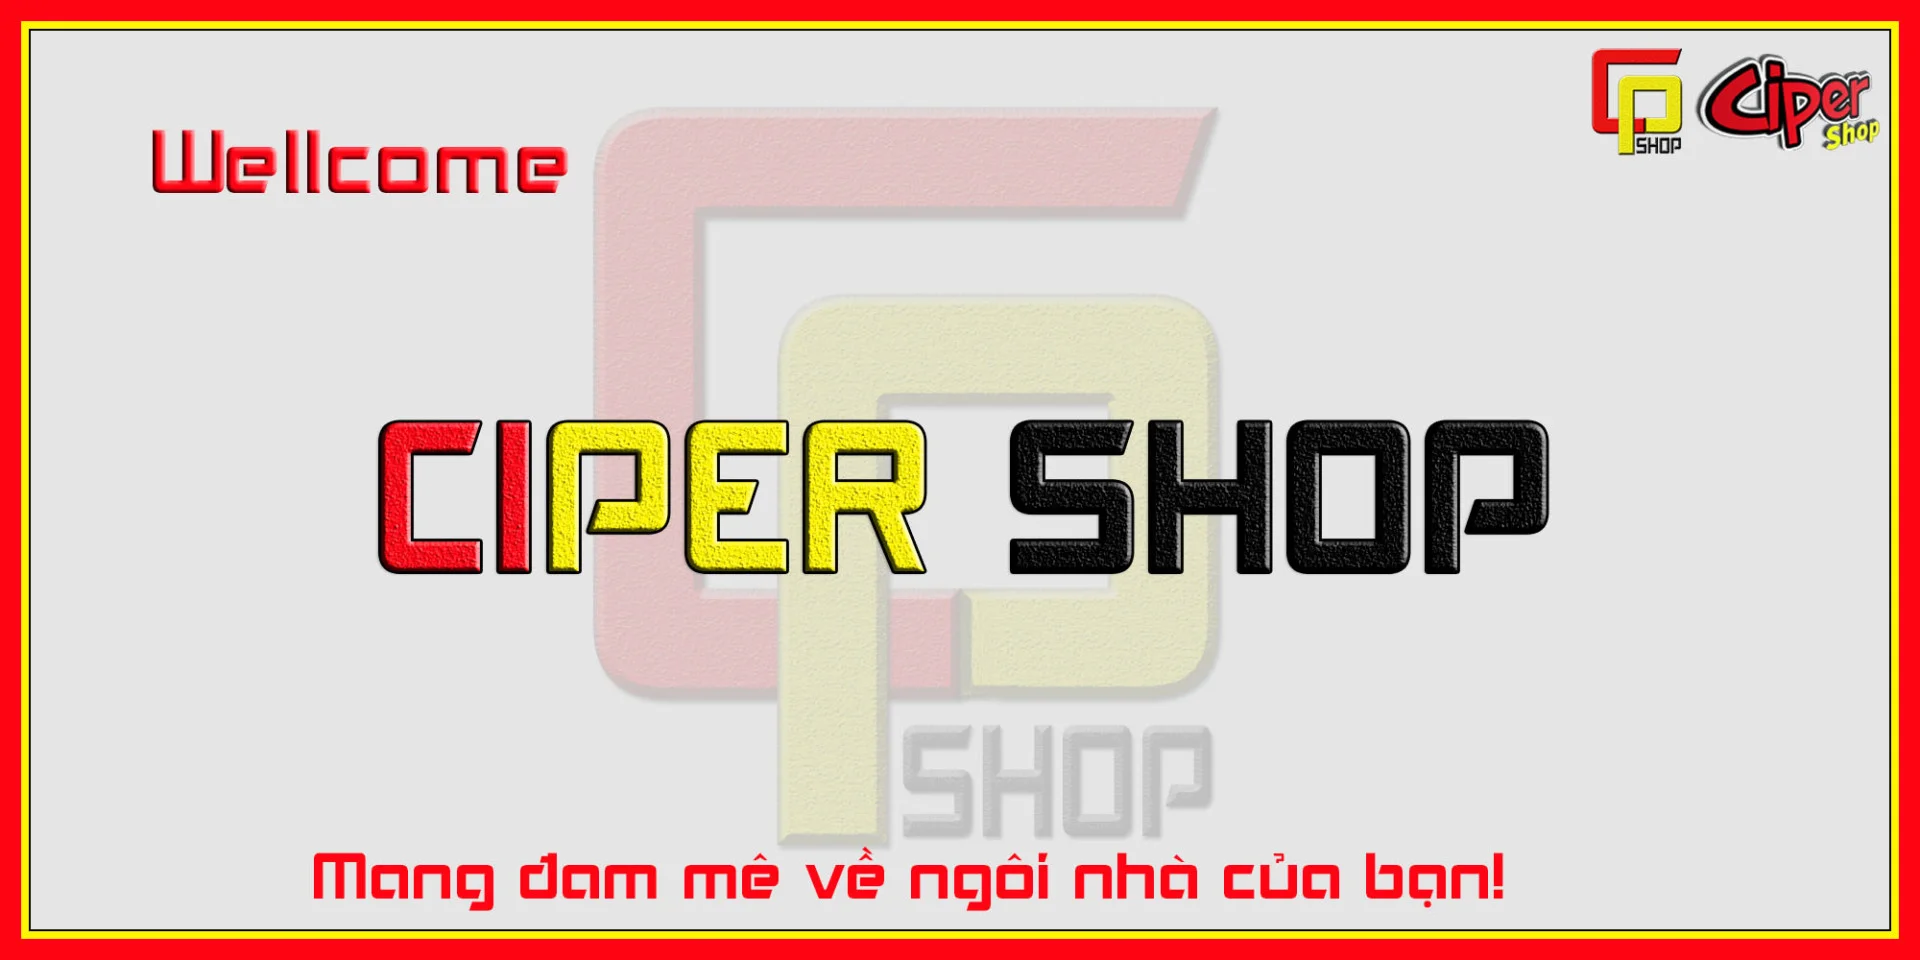 Banner Wellcome Ciper Shop